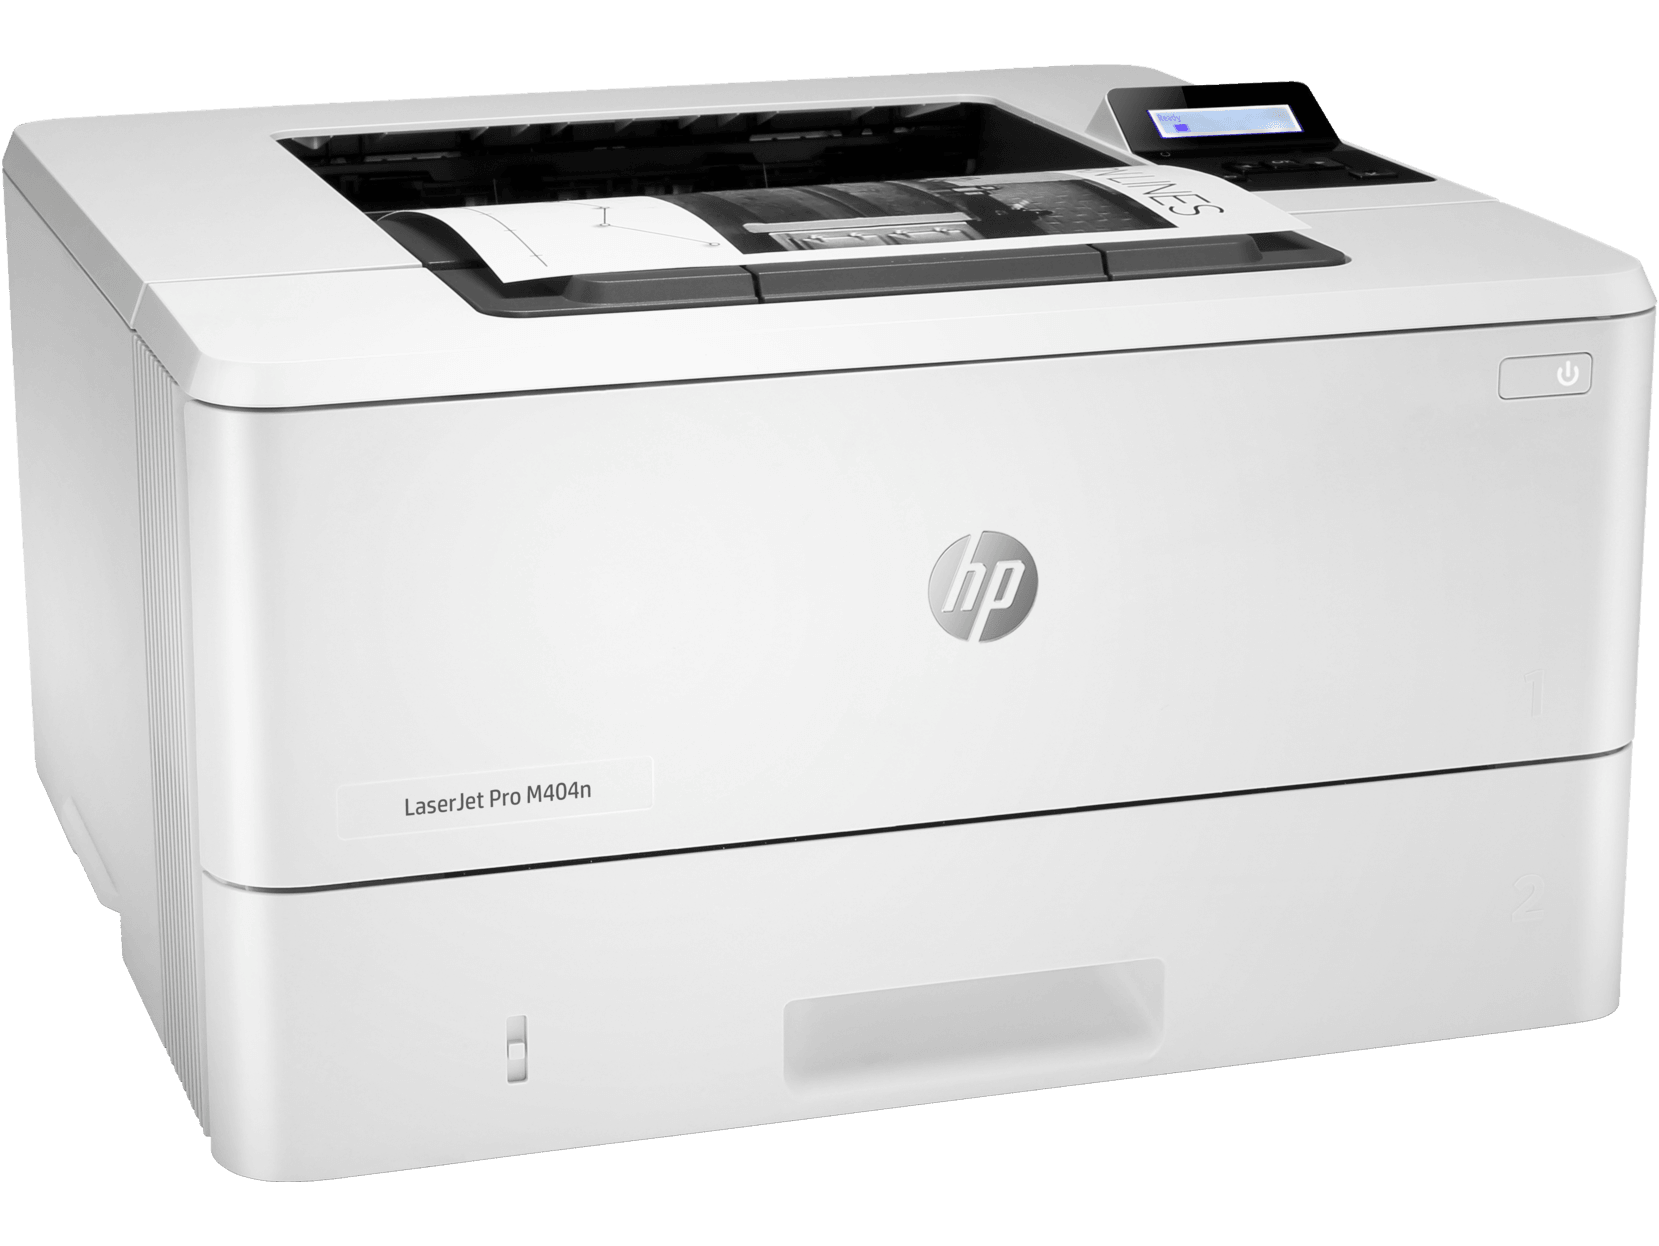 HP LaserJet Pro M404n Printer (W1A52A) - HP LaserJet Pro M404n Printer (W1A52A) - undefined Ennap.com